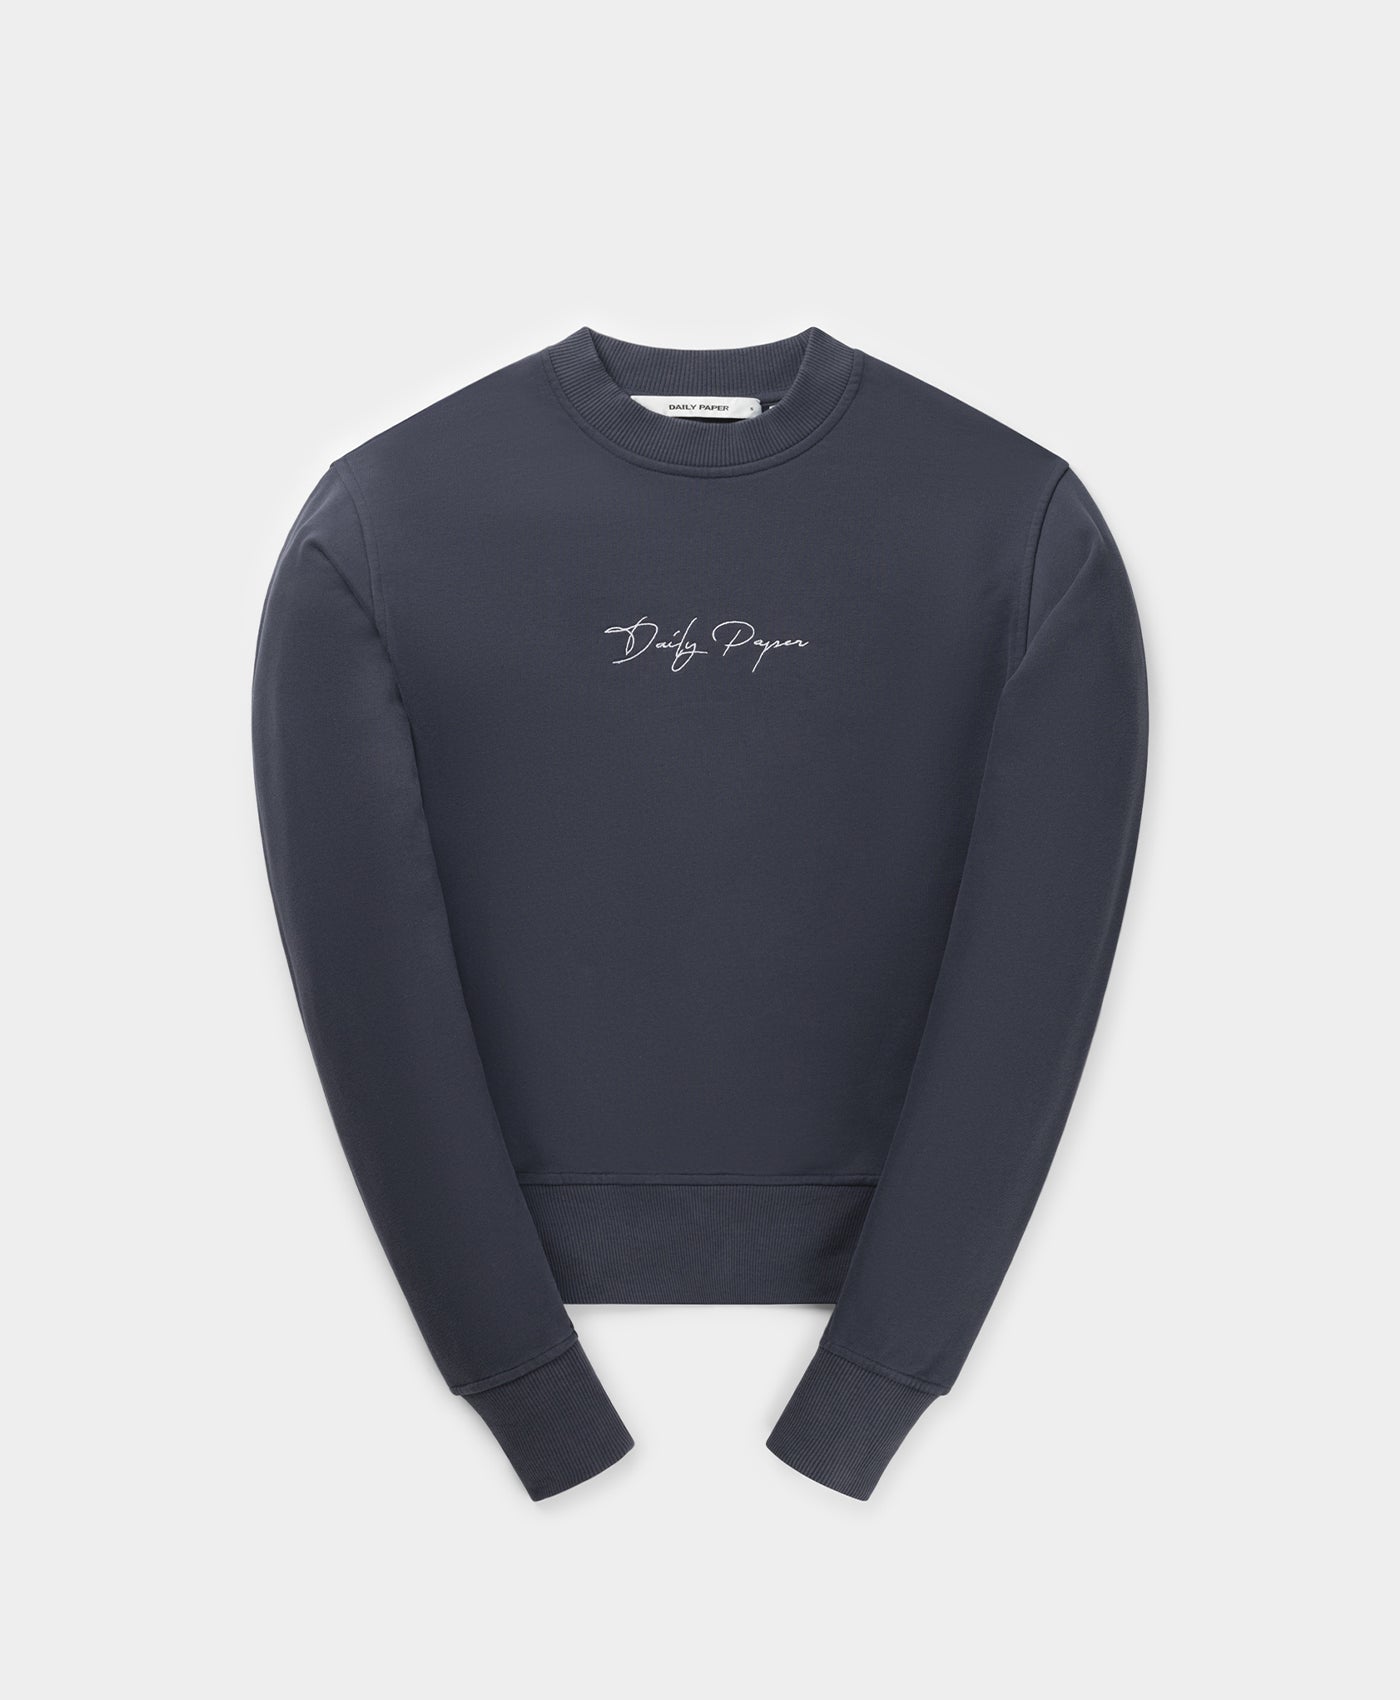 DP - Odyssey Blue Escript Sweater - Packshot - Front